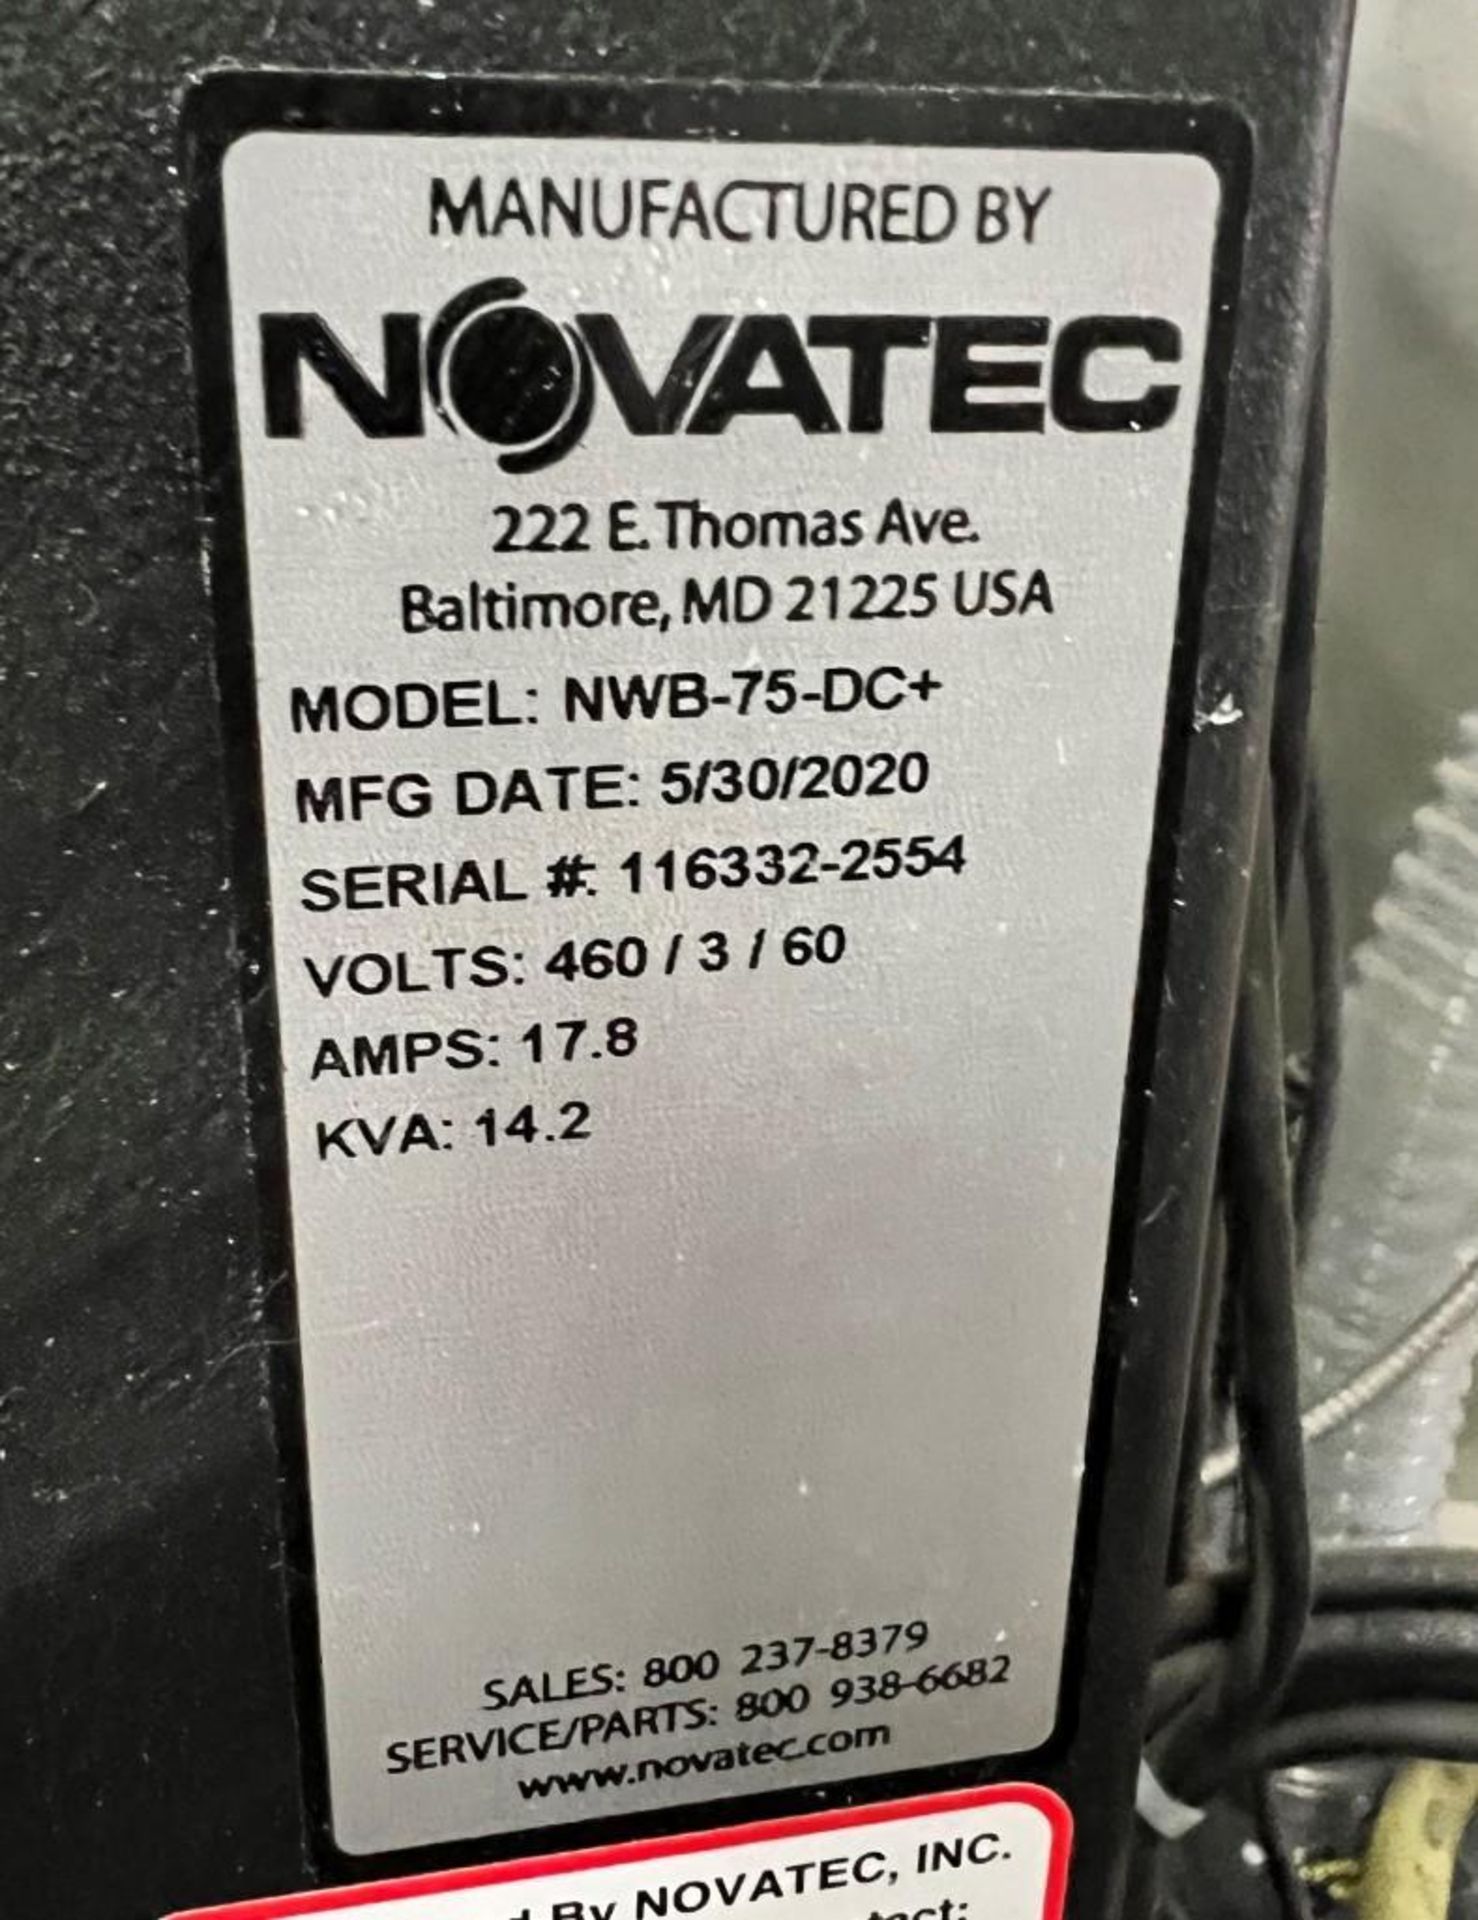 Novatec NovaWheel Portable Dry/Convey Series, Model NWB-75-DC+, Serial# 116332-2554, Built 5/30/2020 - Image 15 of 15